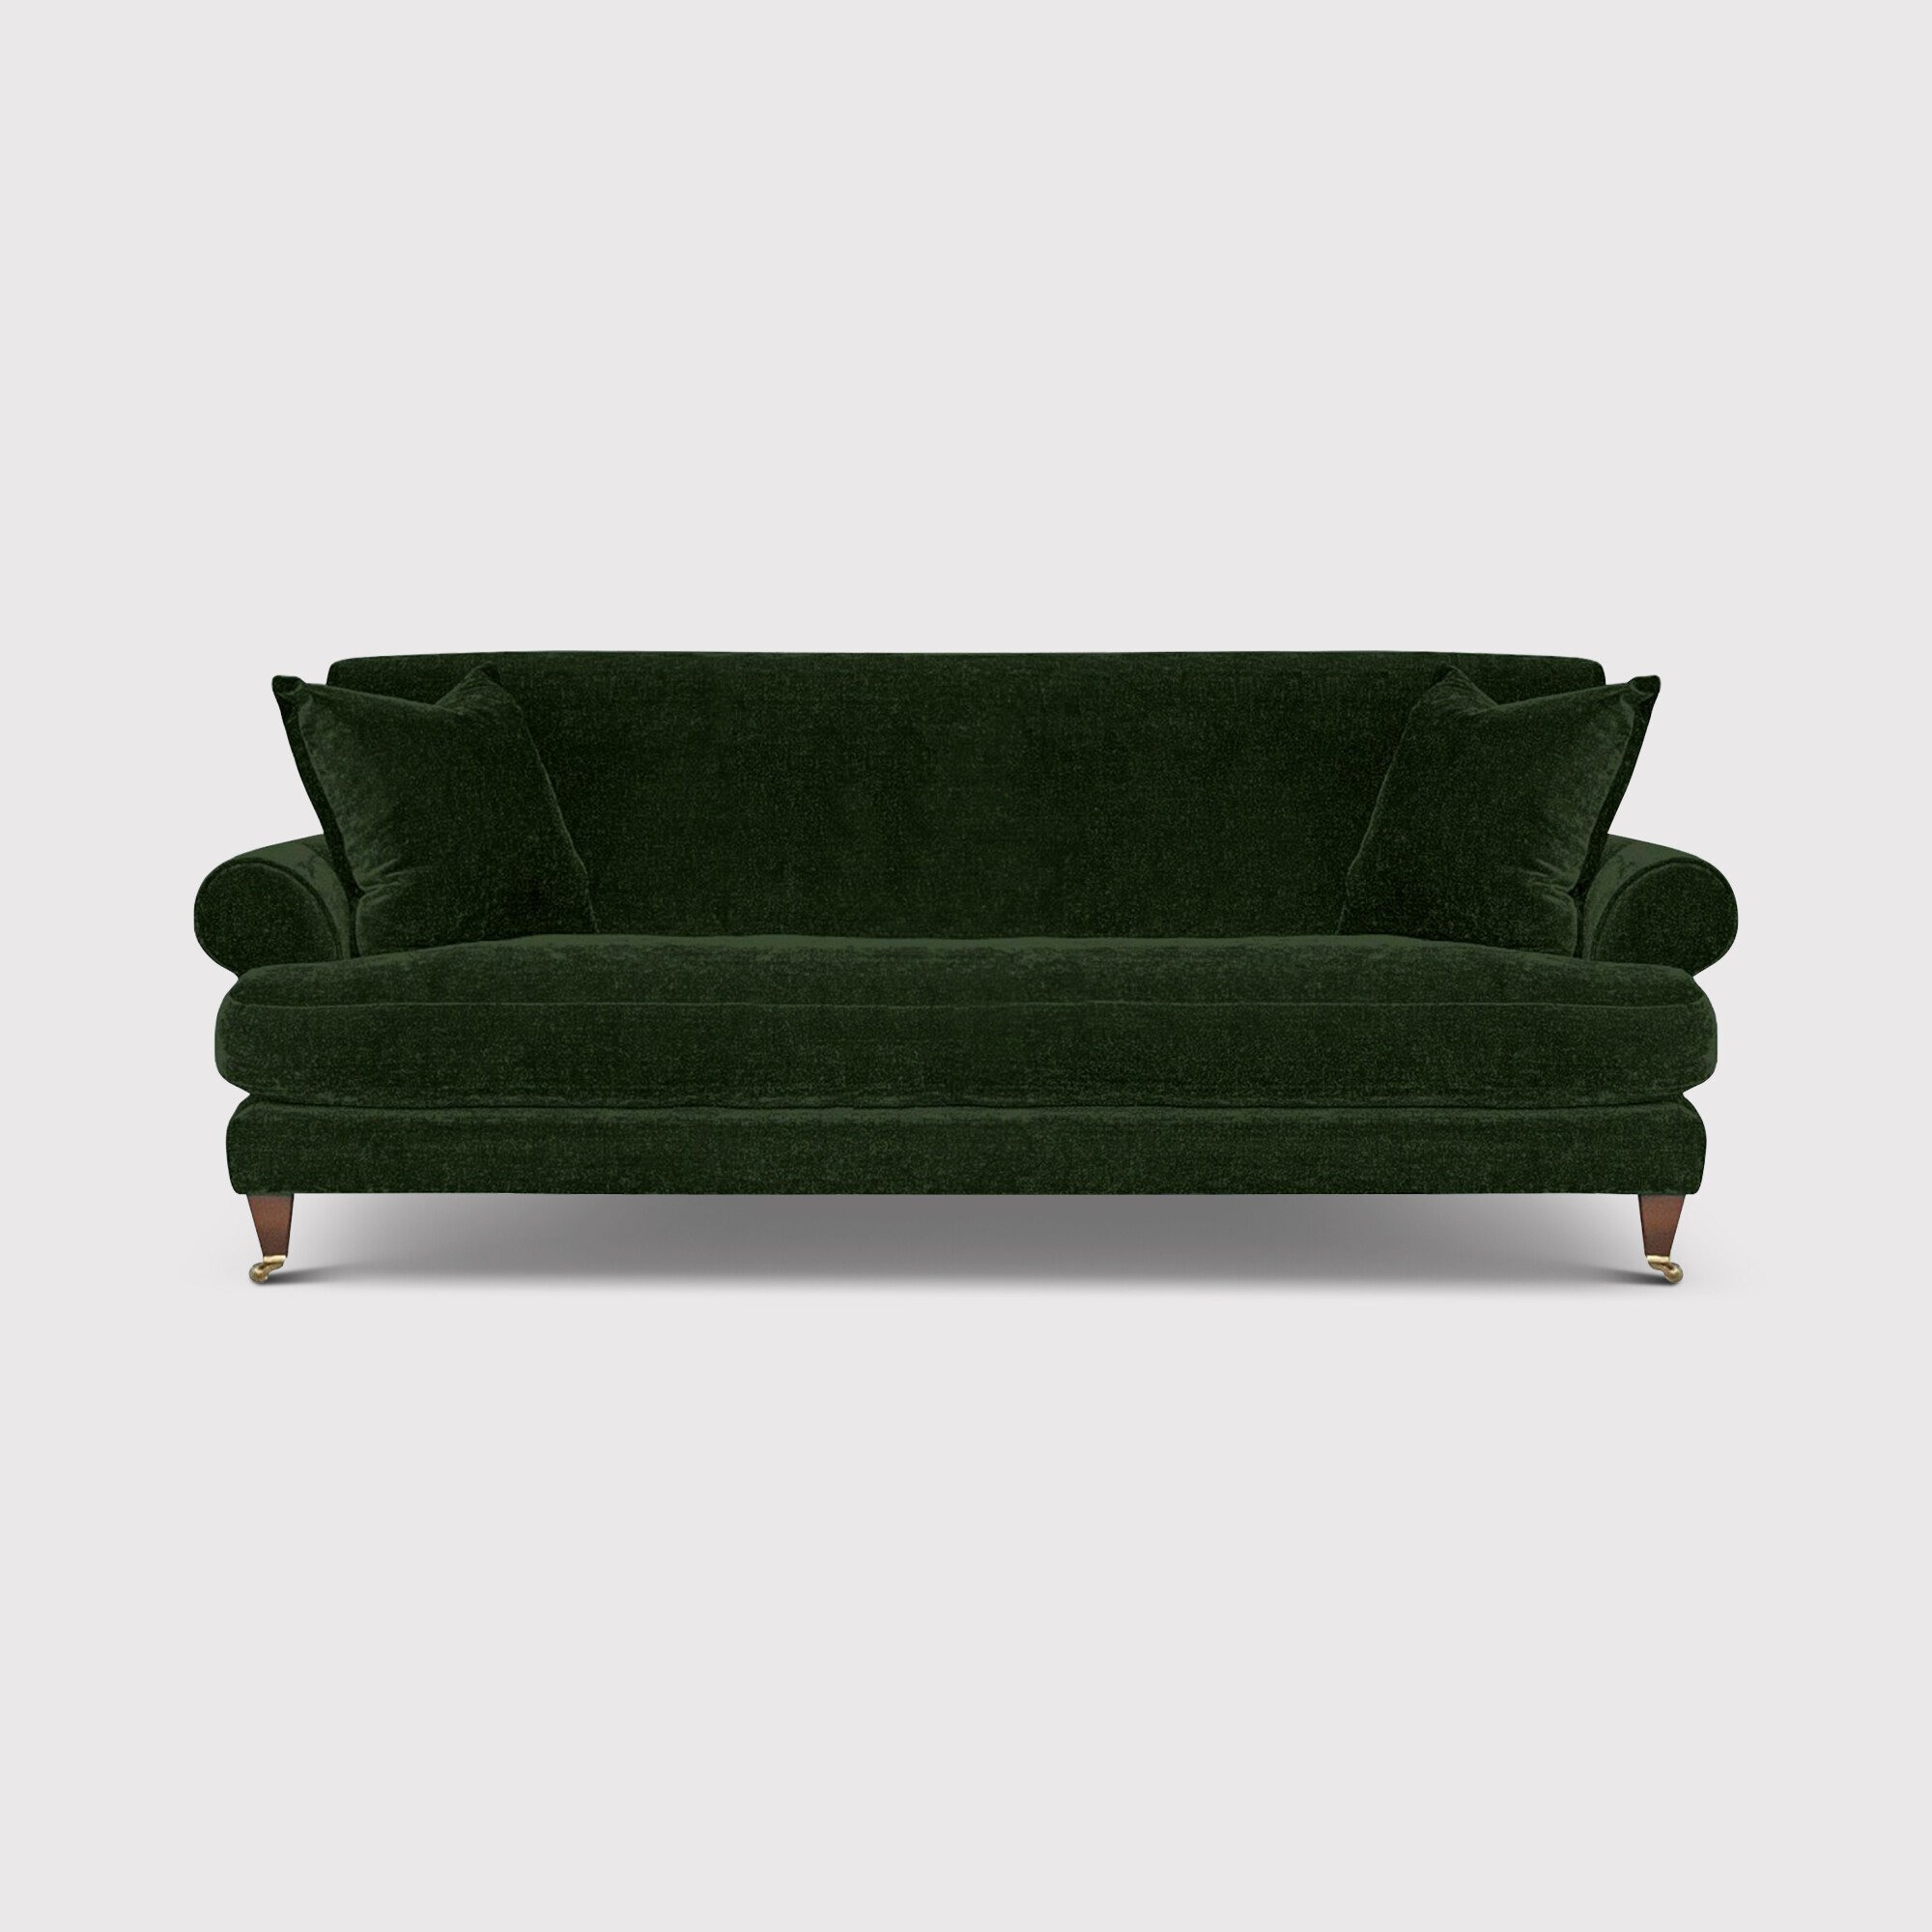 Fairlawn 3 Seater Sofa, Green Fabric - Barker & Stonehouse - image 1